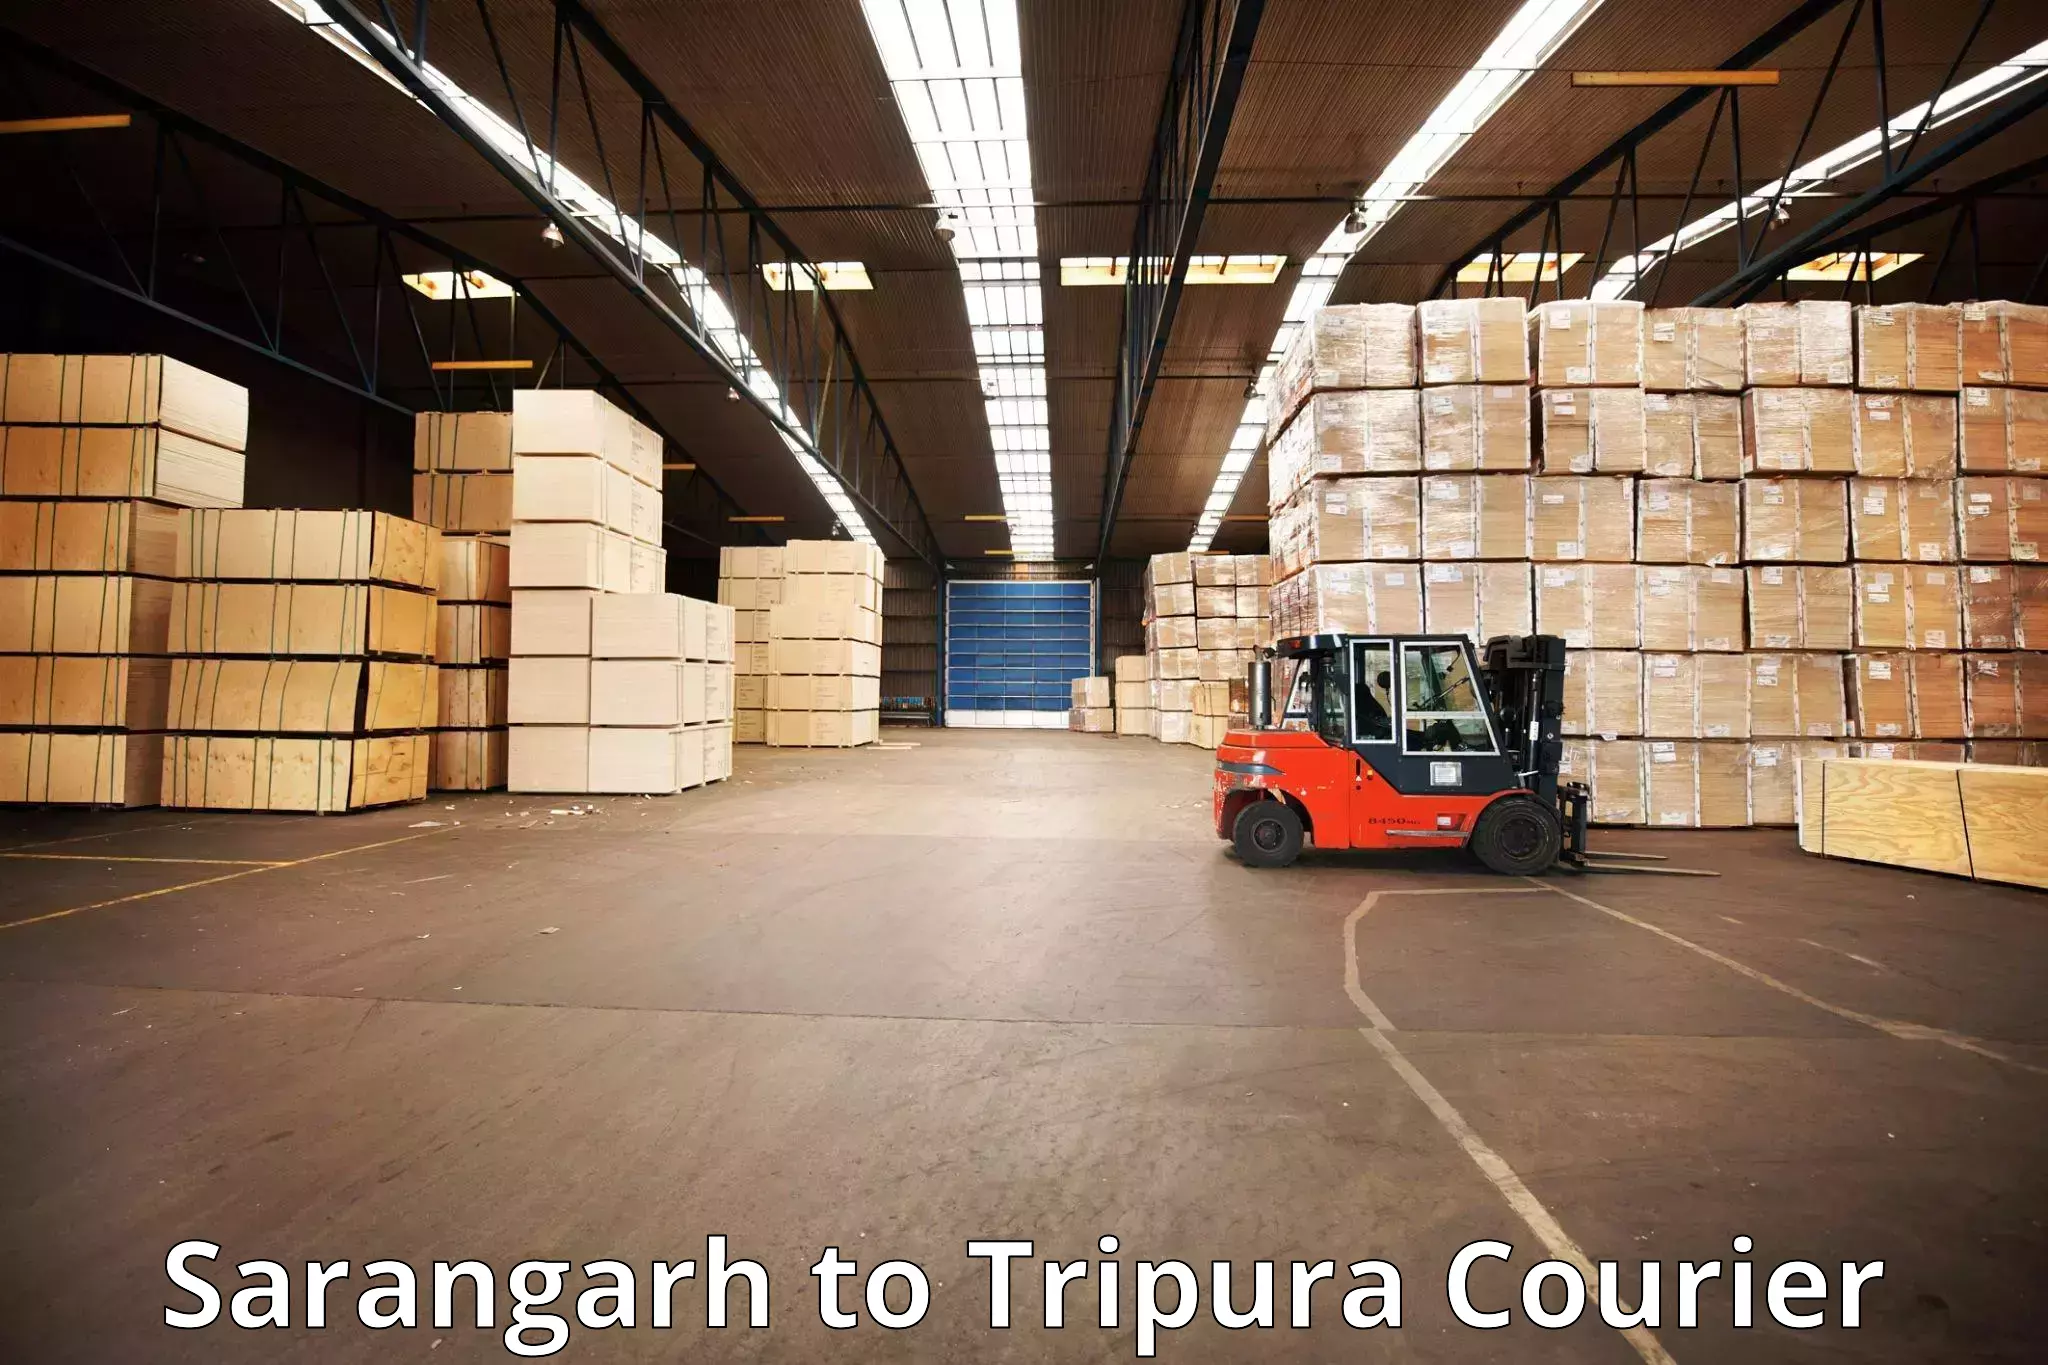 Luggage transport company Sarangarh to Aambasa